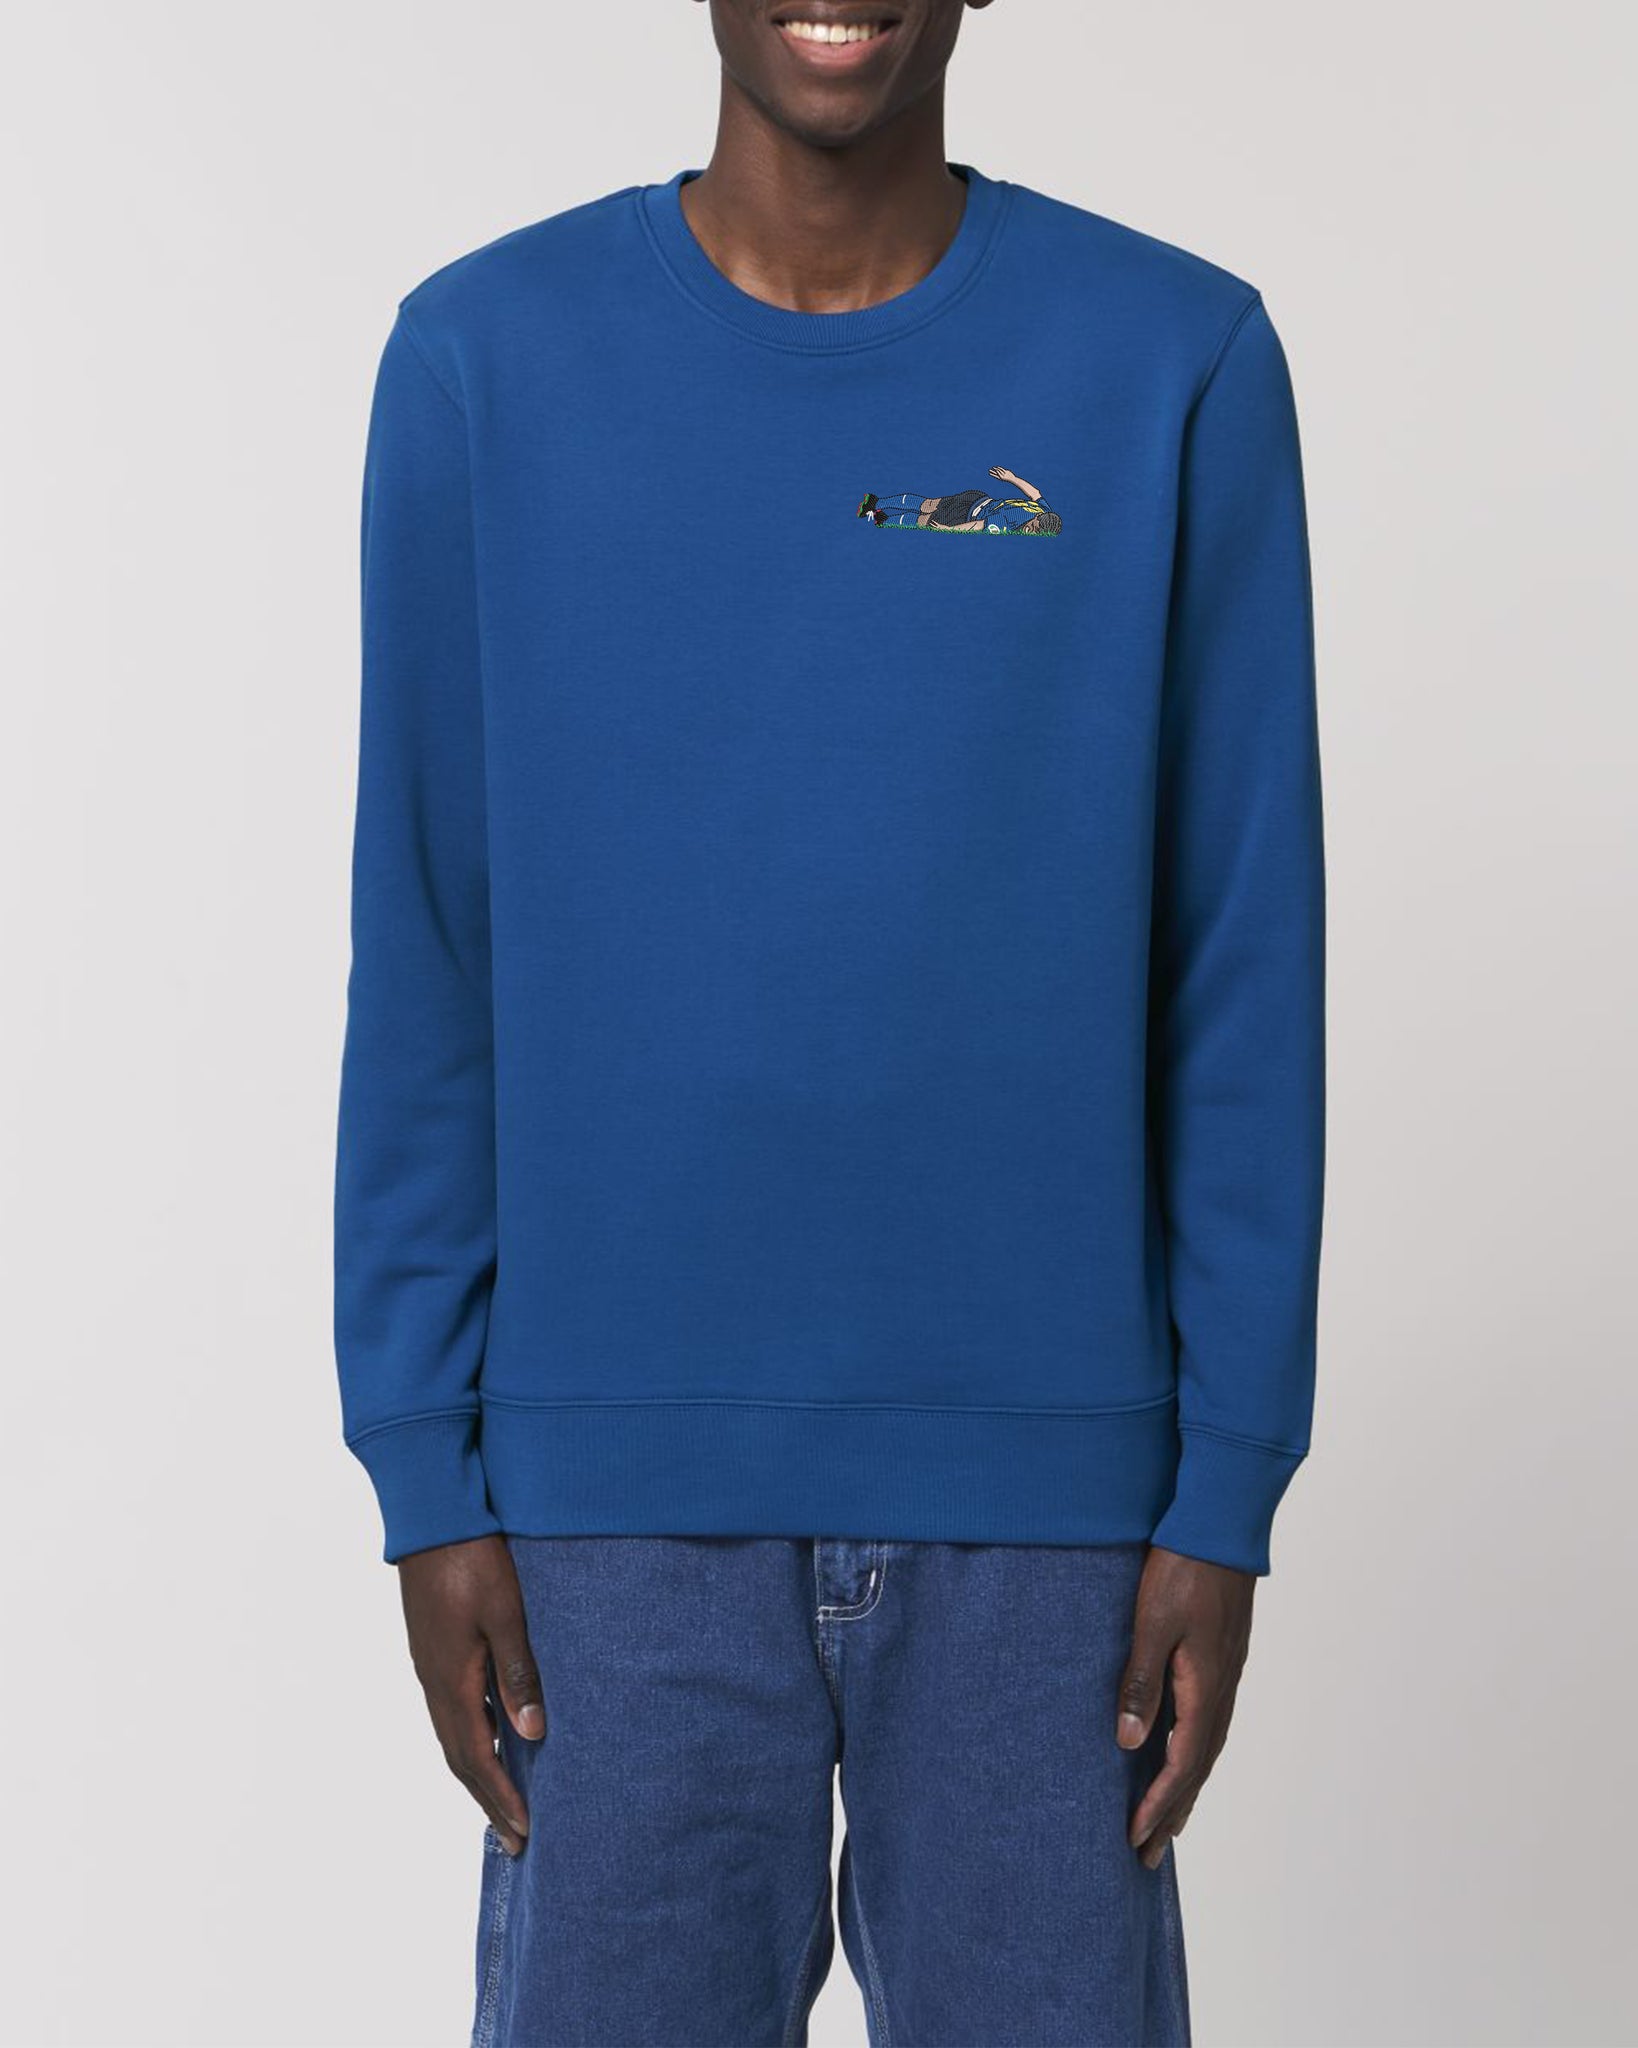 Pessina 😴 embroidered sweatshirt